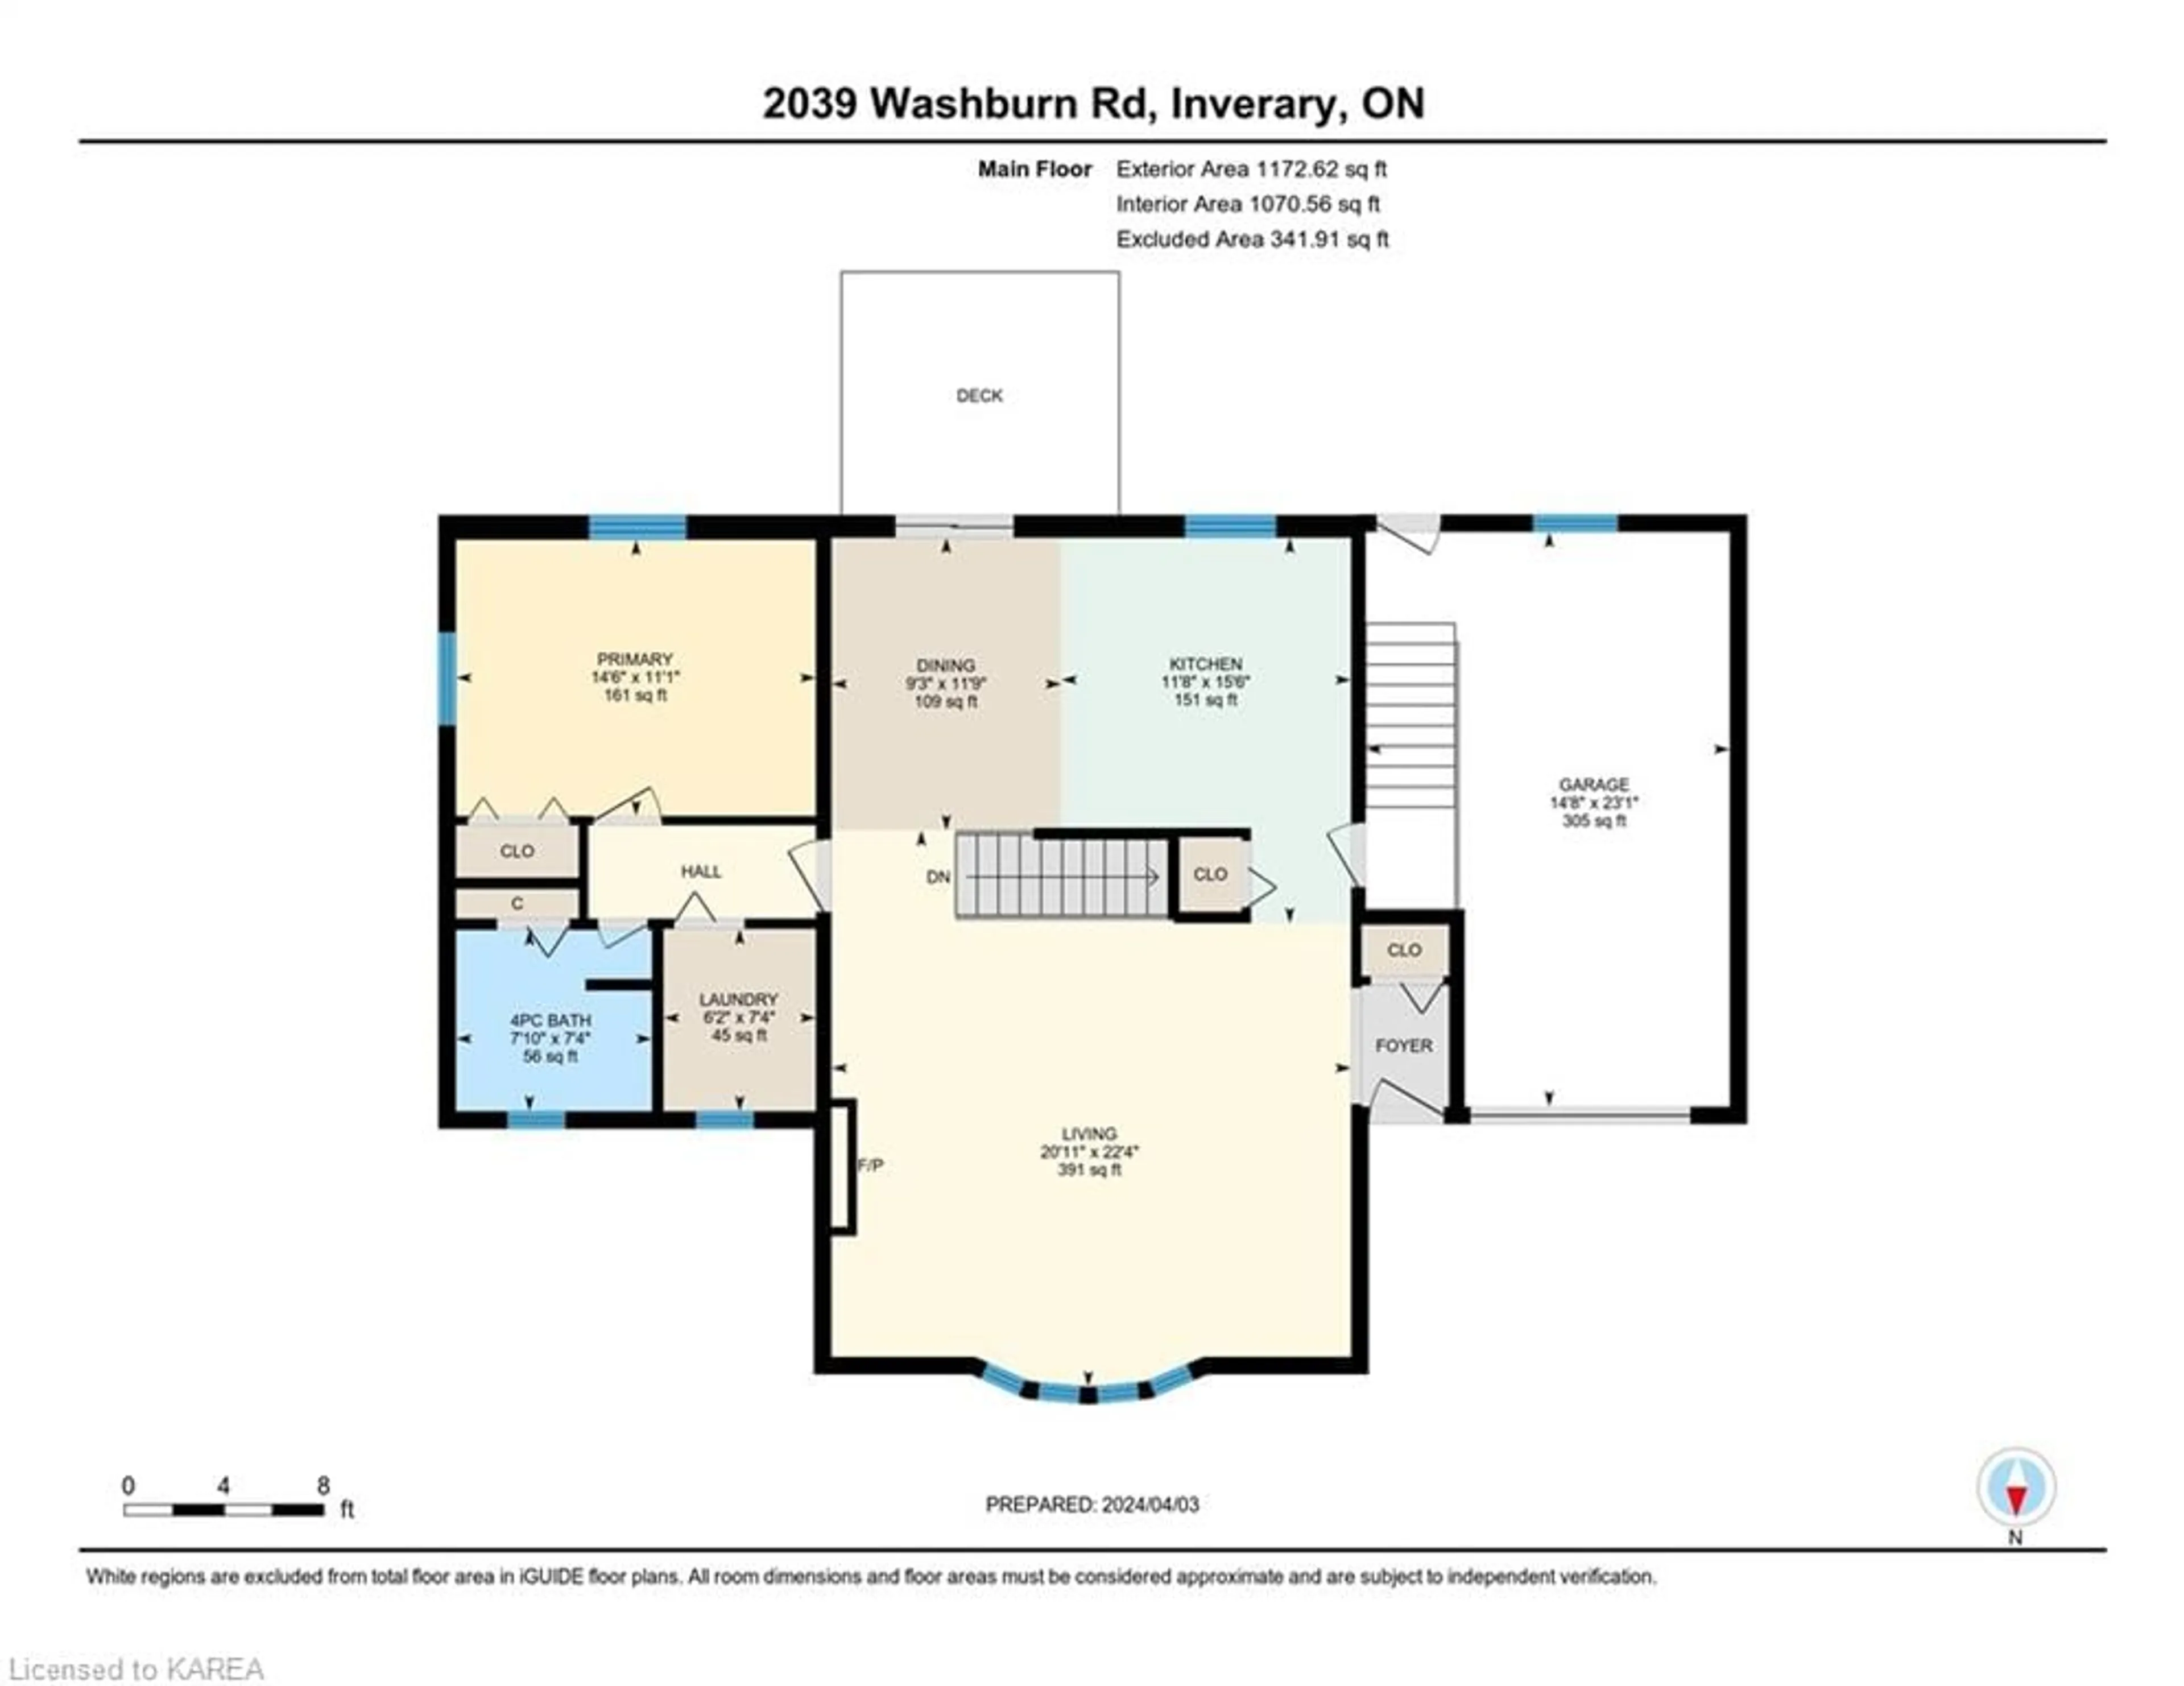 Floor plan for 2039 Washburn Rd, Inverary Ontario K0H 1X0